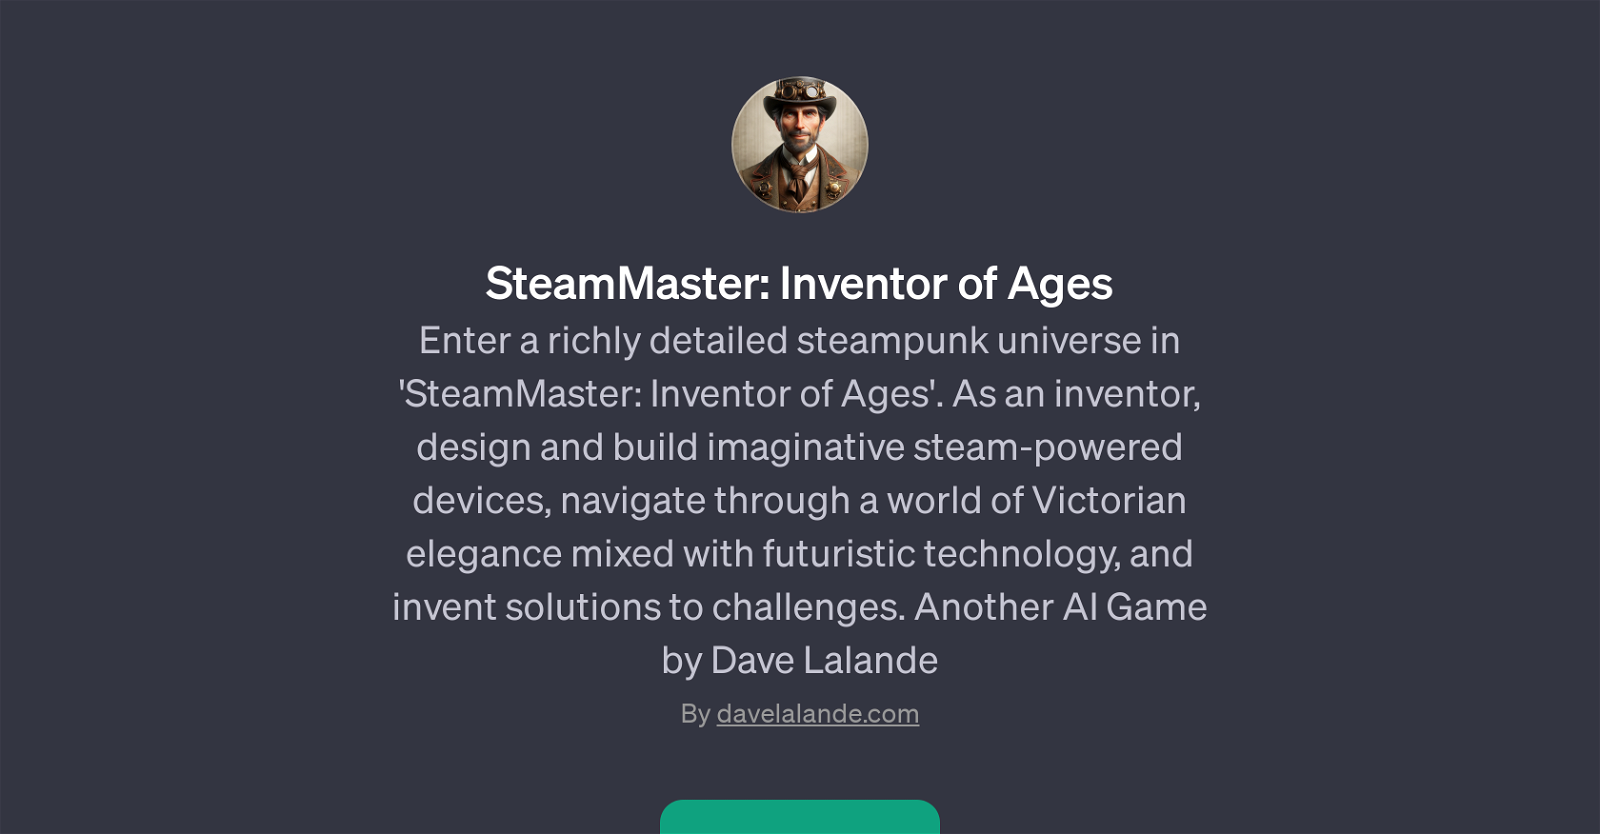 SteamMaster: Inventor of Ages website